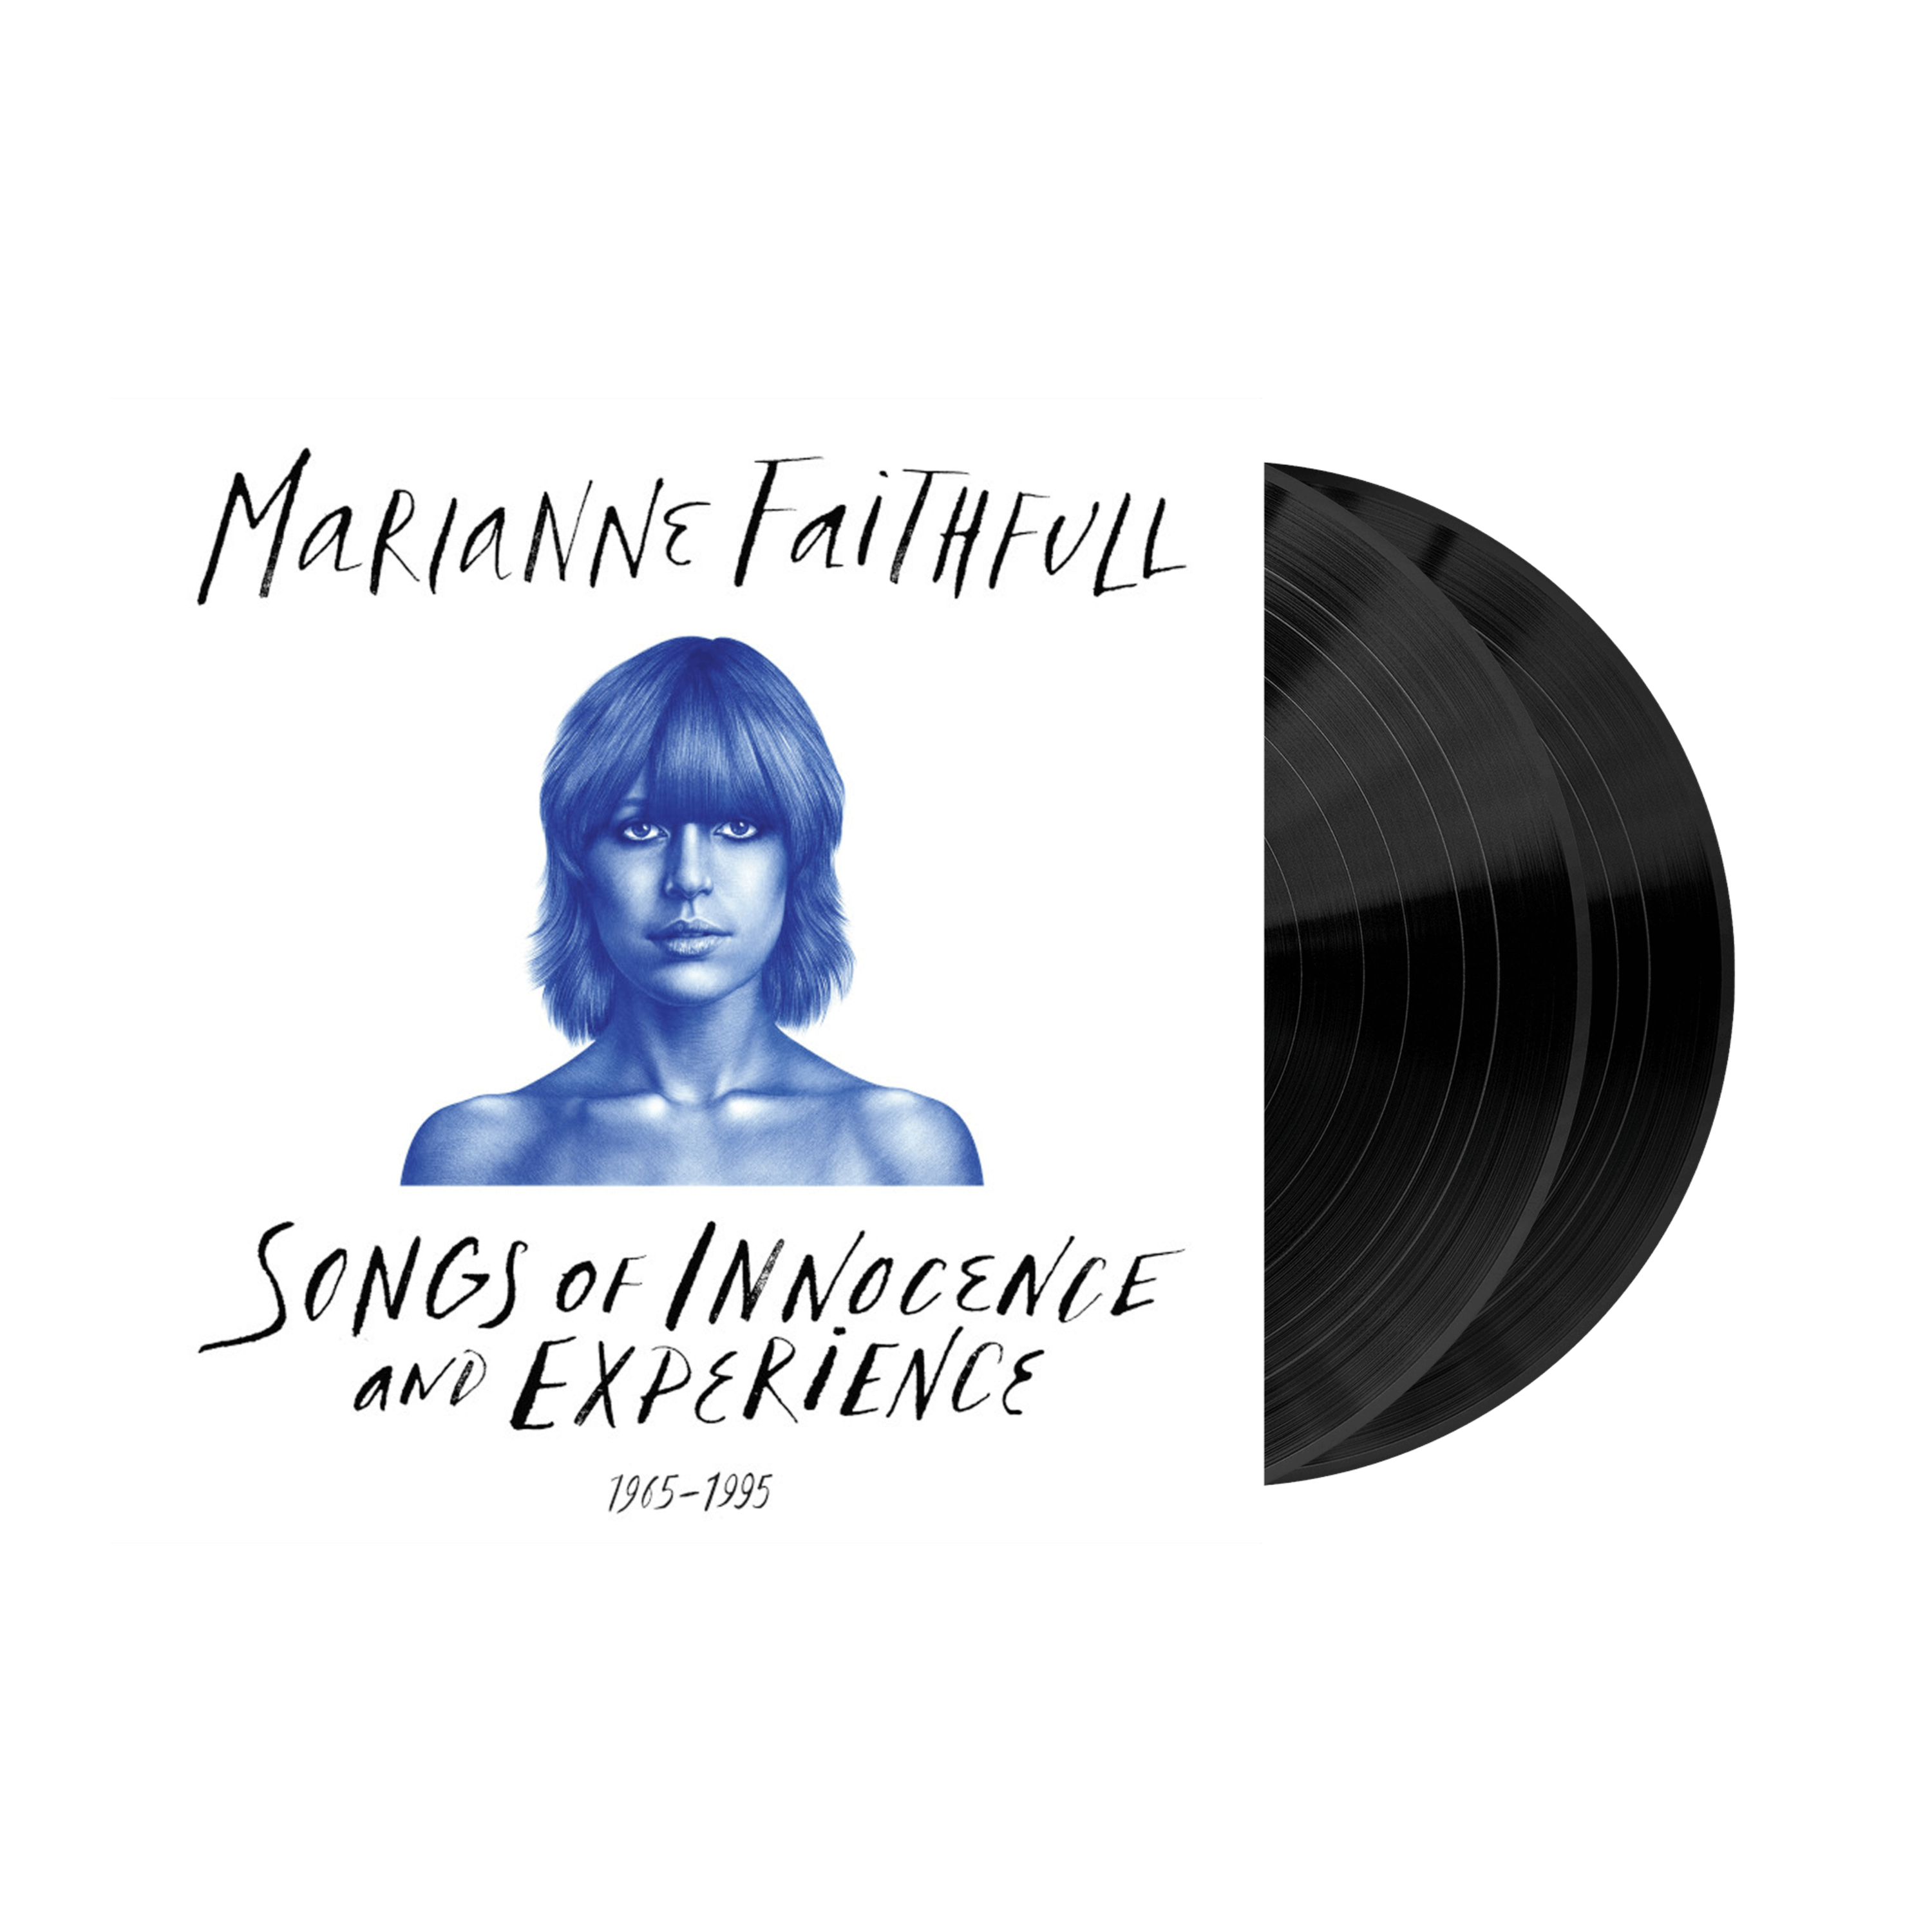 Marianne Faithfull - Songs Of Experience And Innocence 1965 – 1995